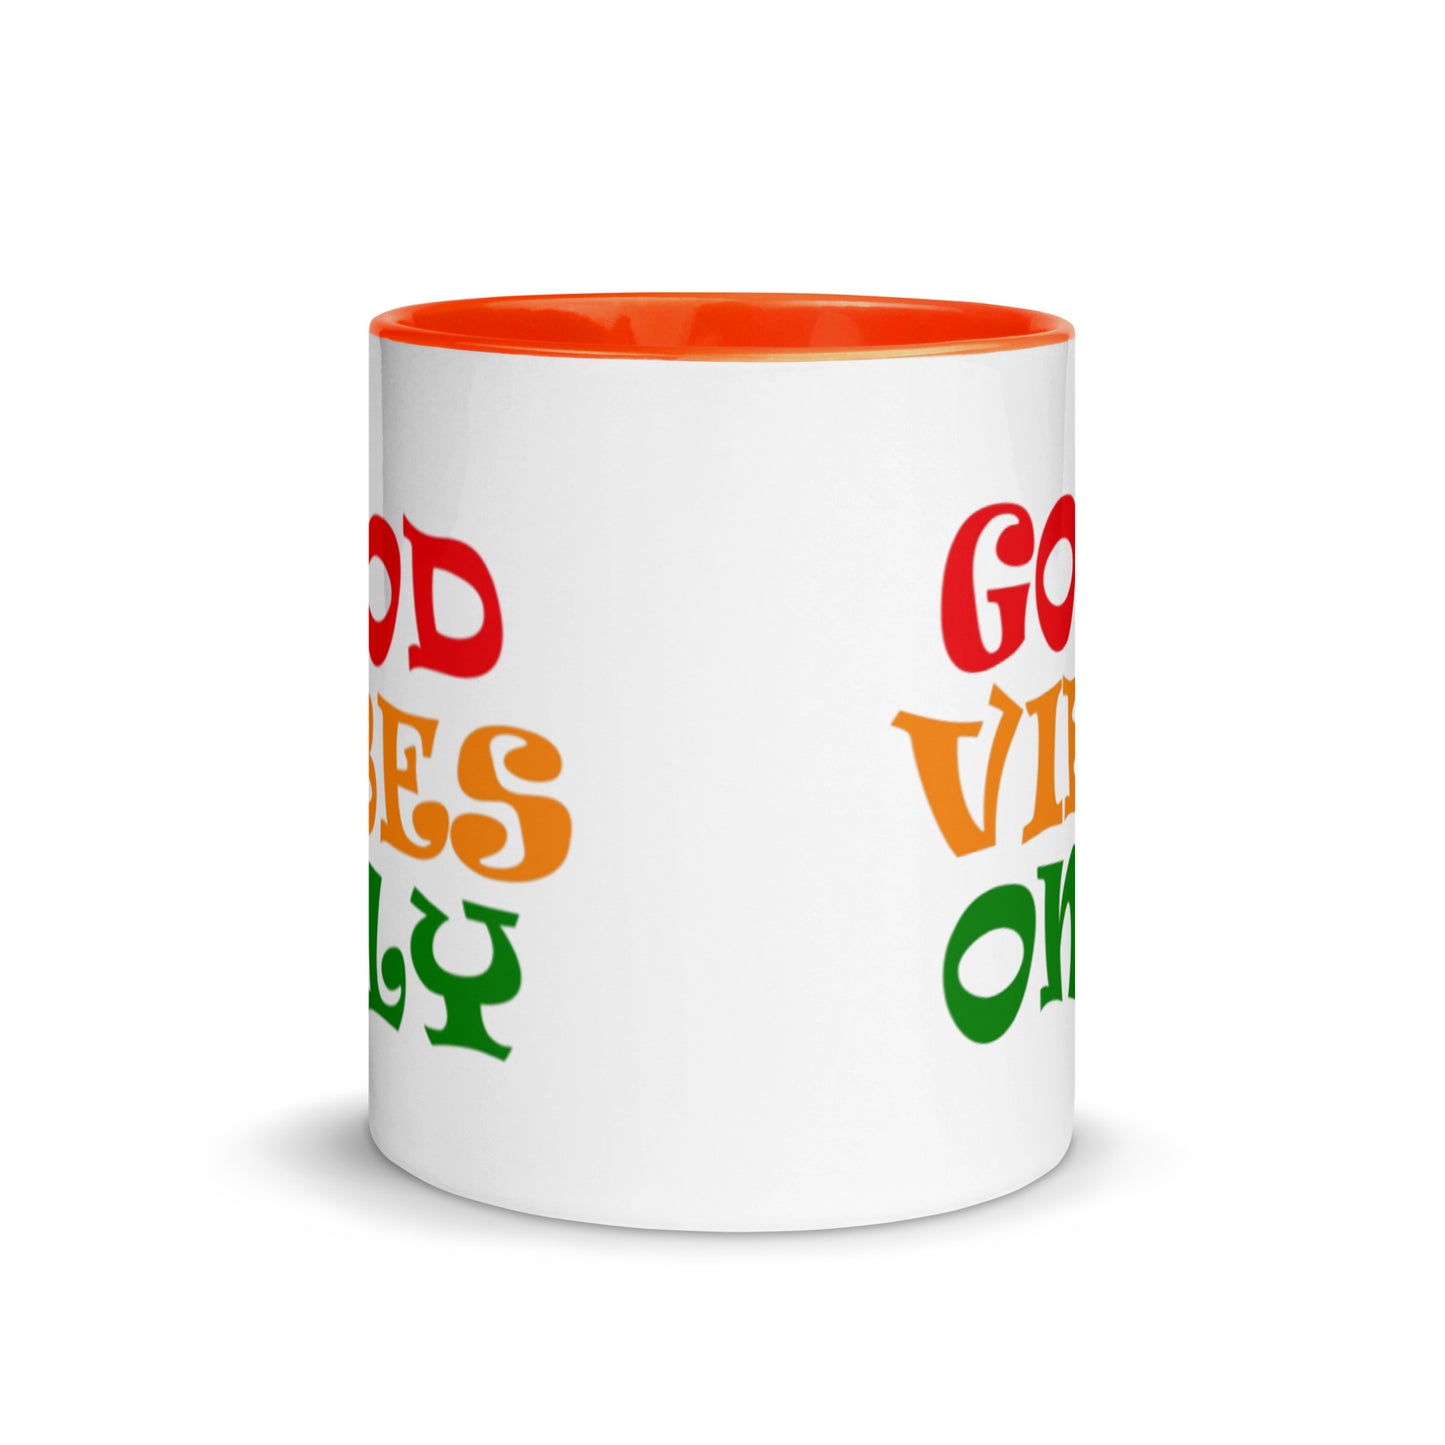 good vibes only ceramic mug, orange interior and orange handle